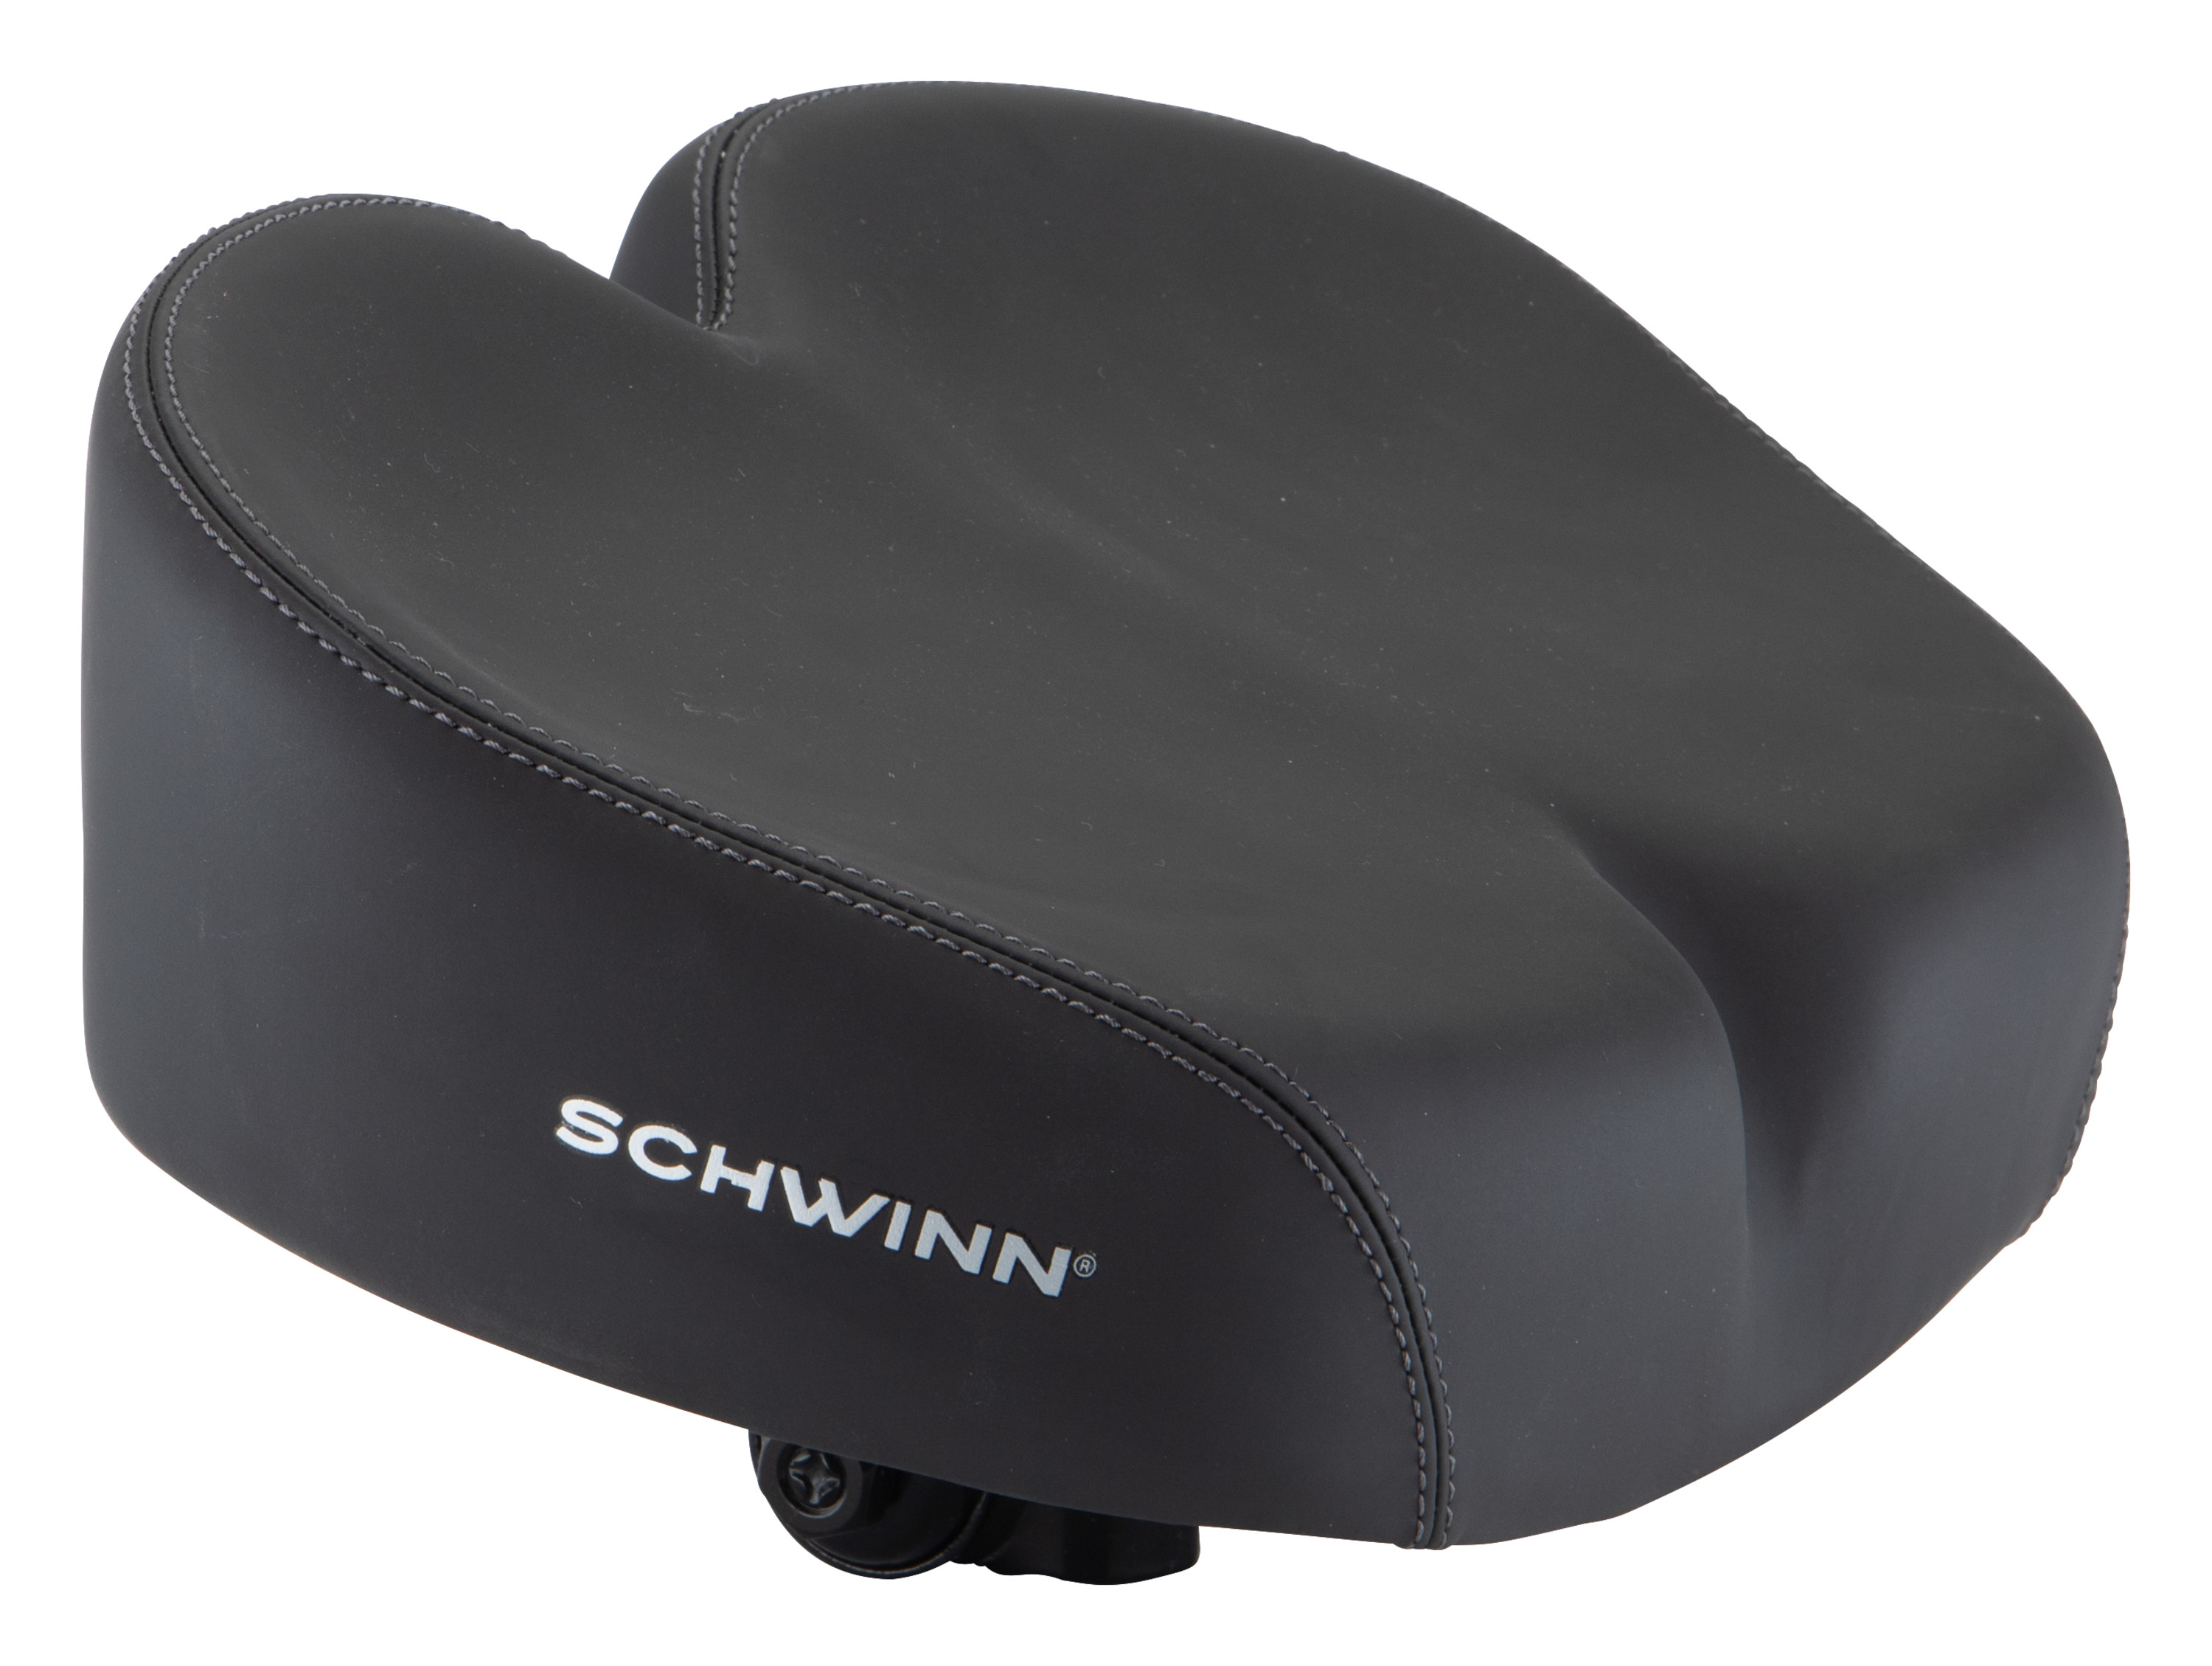 Schwinn Cruise Noseless Foam Bicycle Saddle, Black - image 1 of 7